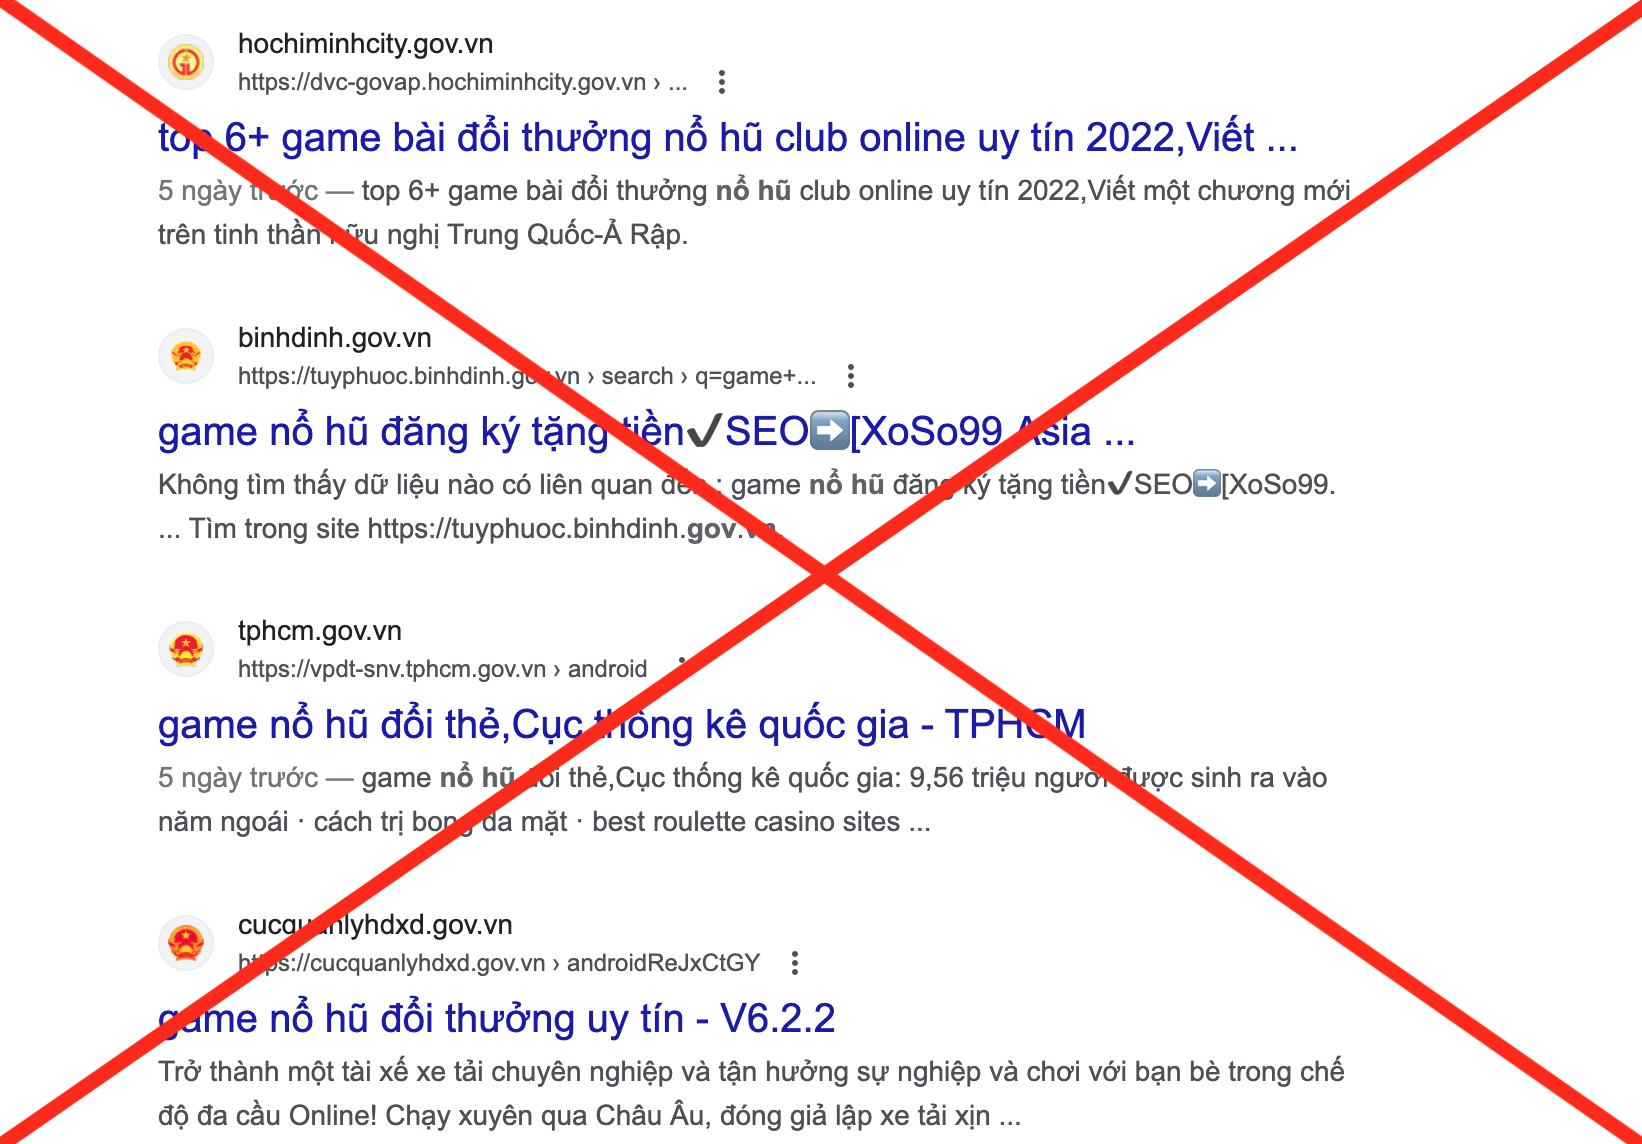 Online gambling ads rampant on Vietnam’s state-run websites again